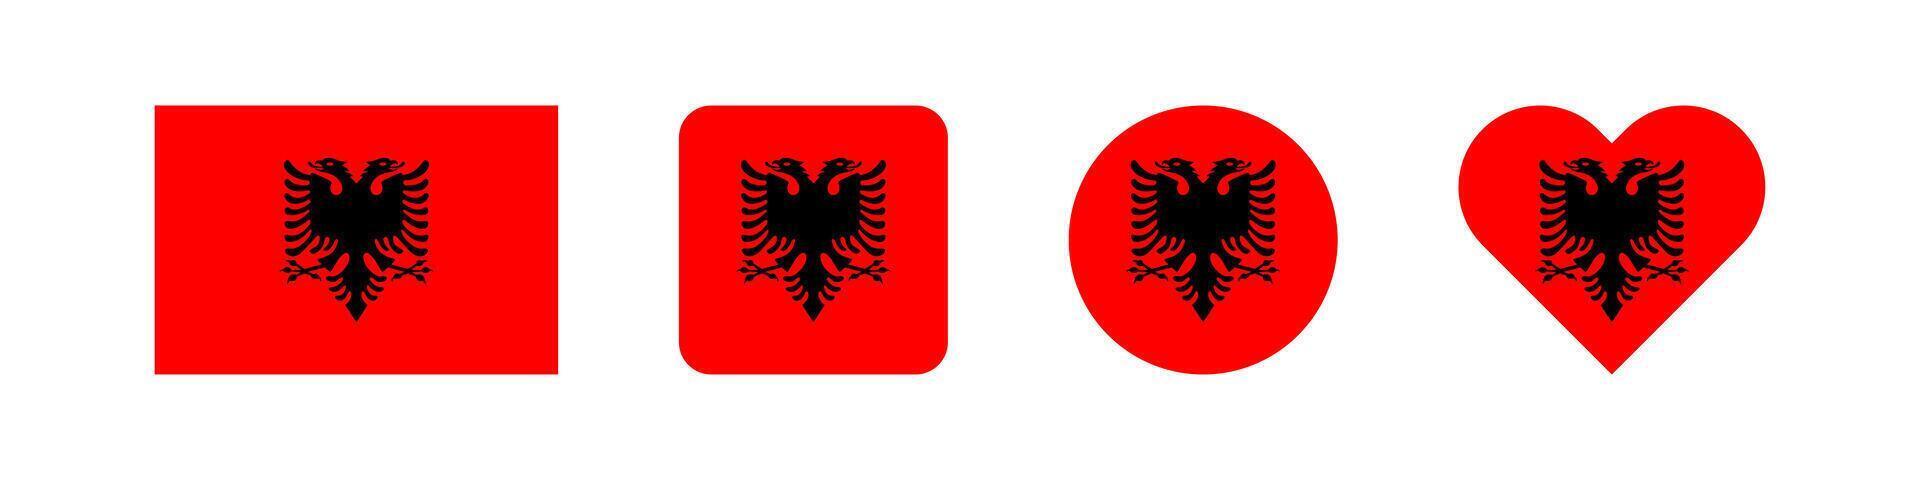 Albanië land vlag. Albanees nationaal embleem. Europa land spandoek. vector